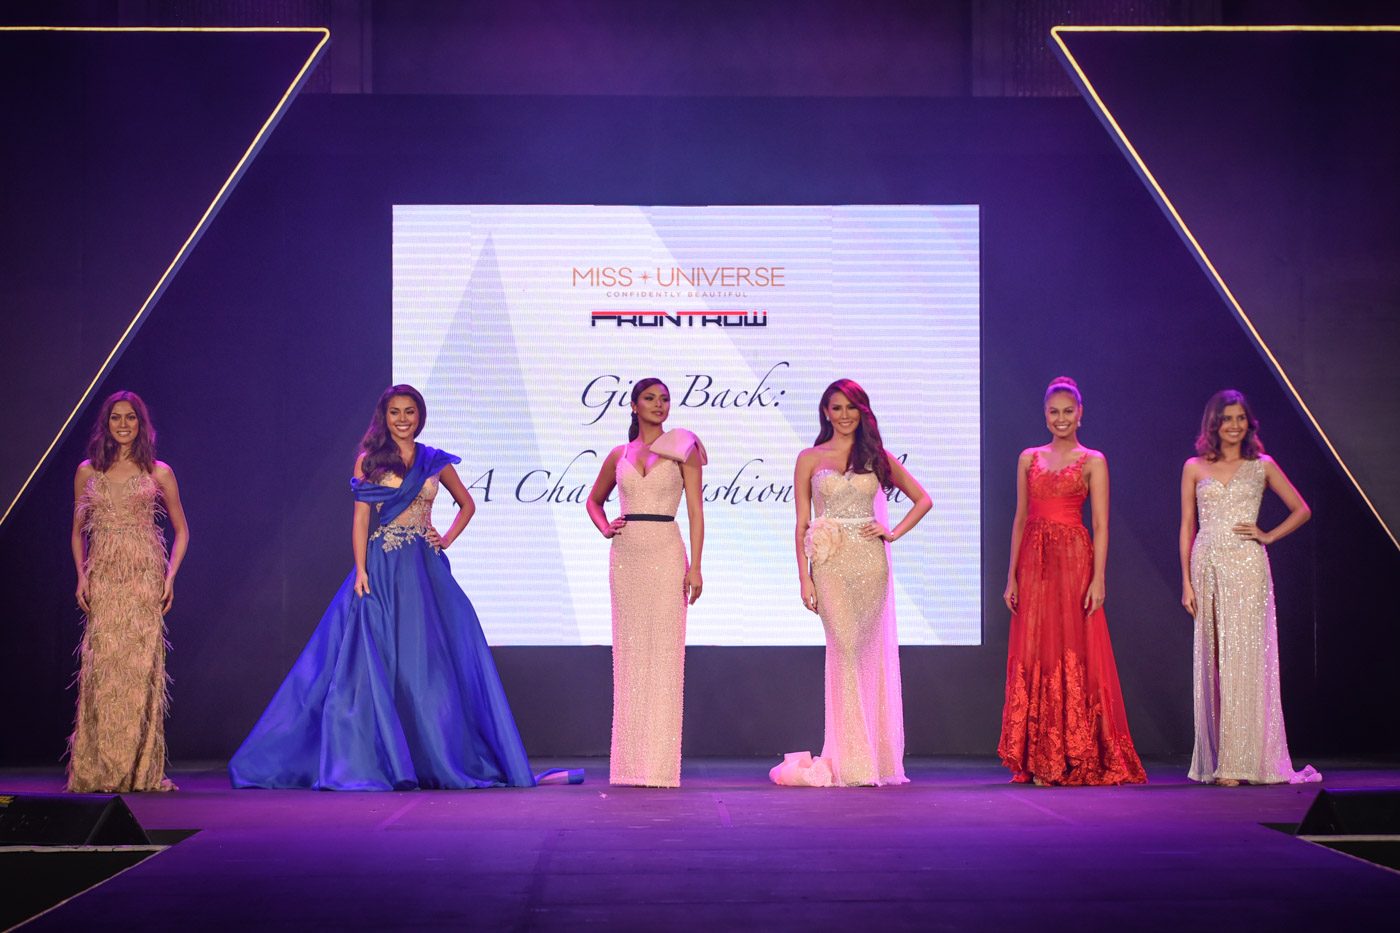 The 6 former Miss Universe Philippines title holders (L-R) Ariella Arida, MJ Lastimosa, Maxine Medina, Bianca Manalo, Venus Raj, and Shamcey Supsup 